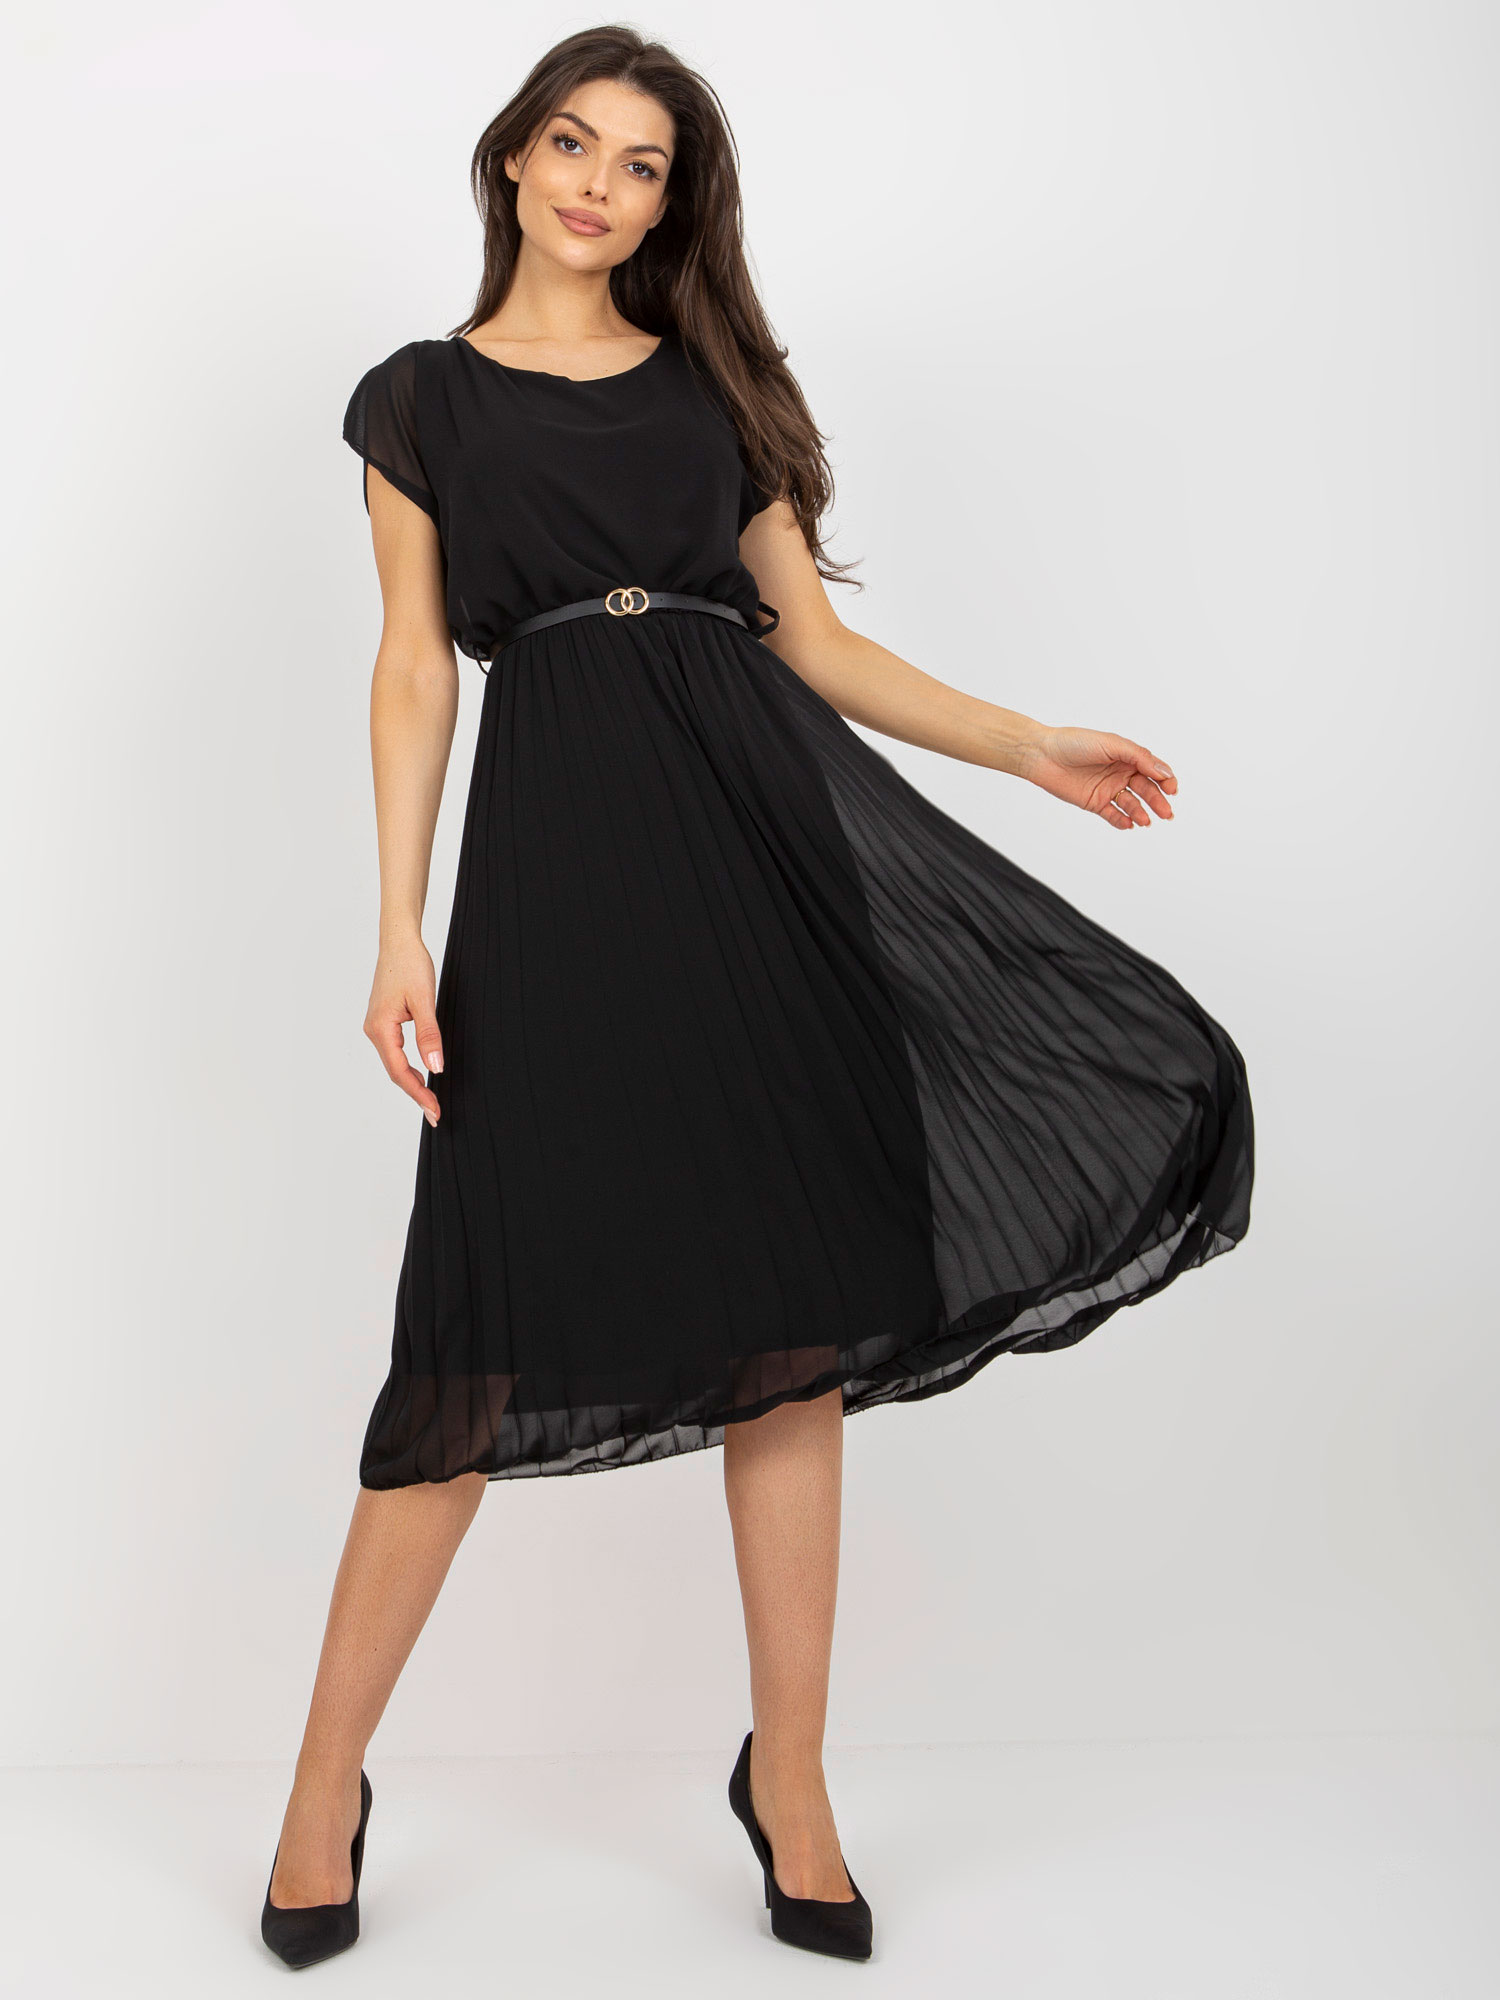 Black pleated dress with a round neckline